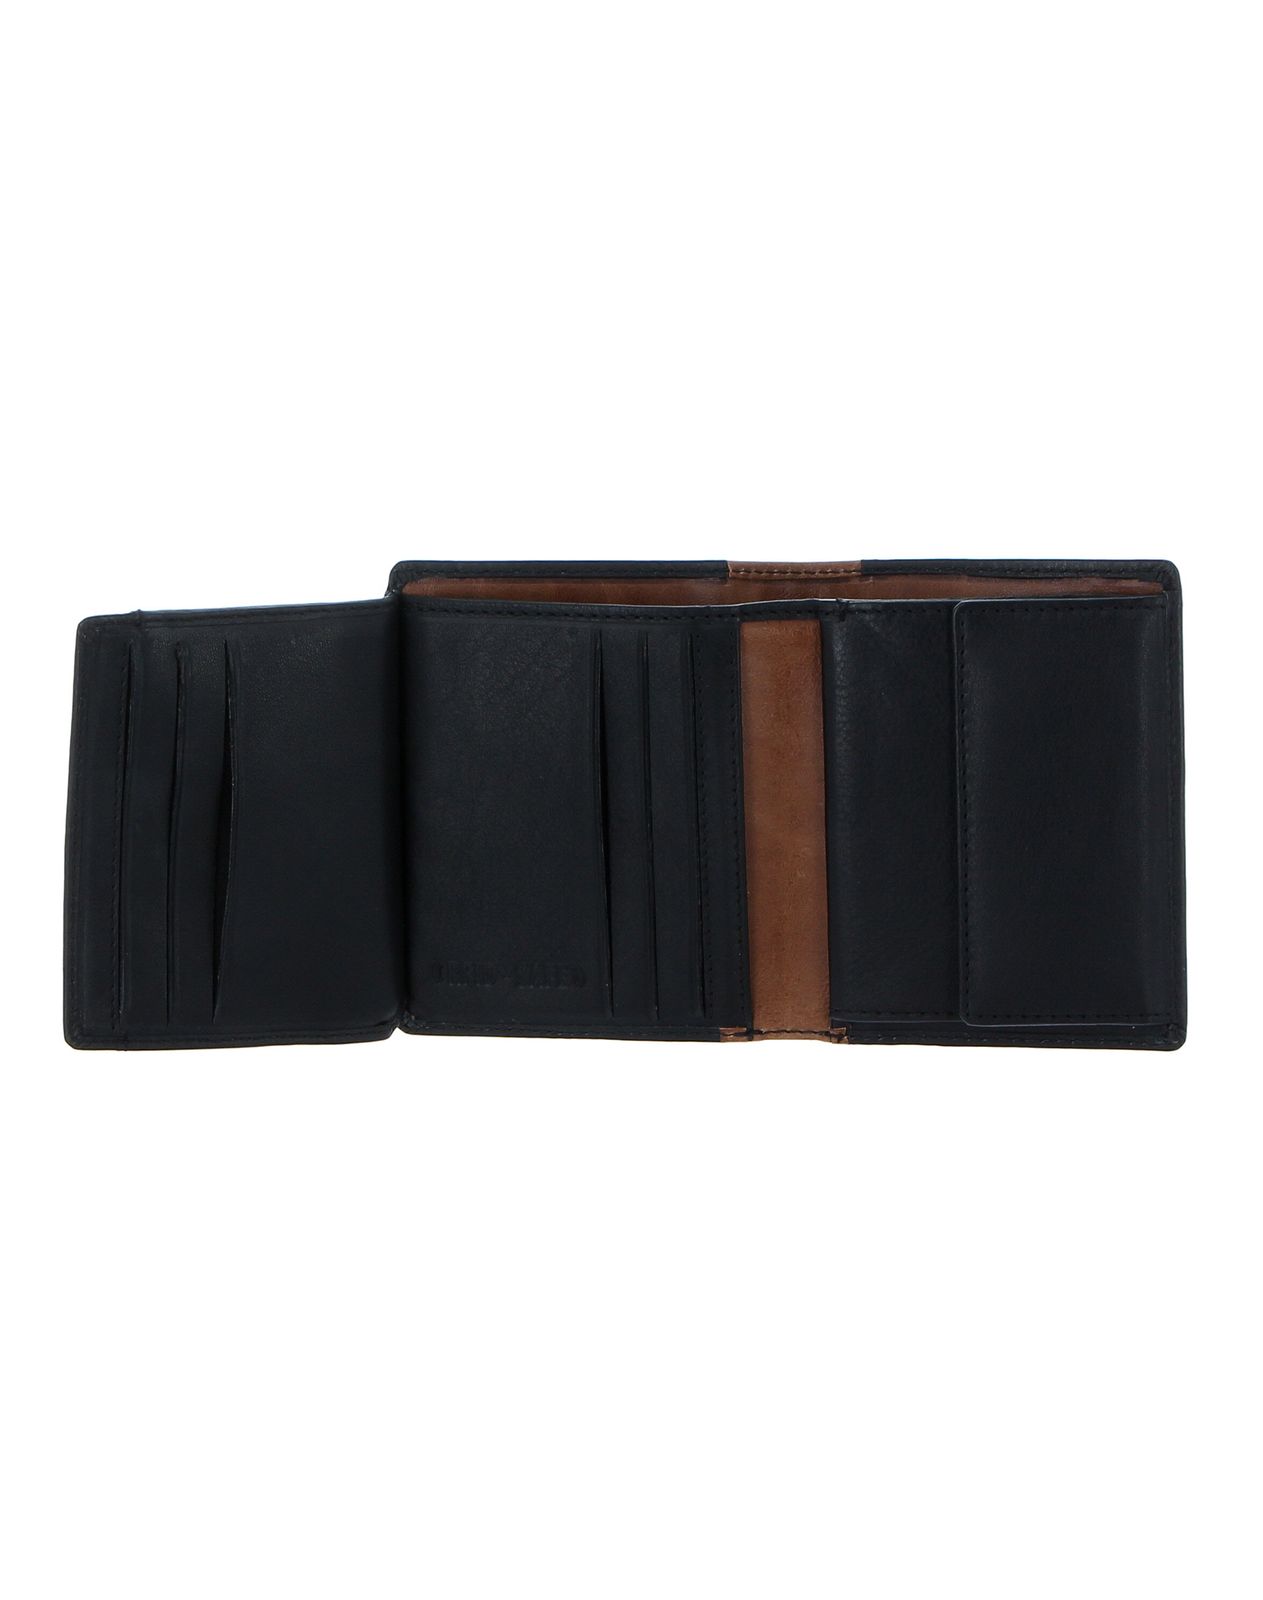 CHIEMSEE Wallet with Flap Black modeherz | / Cognac